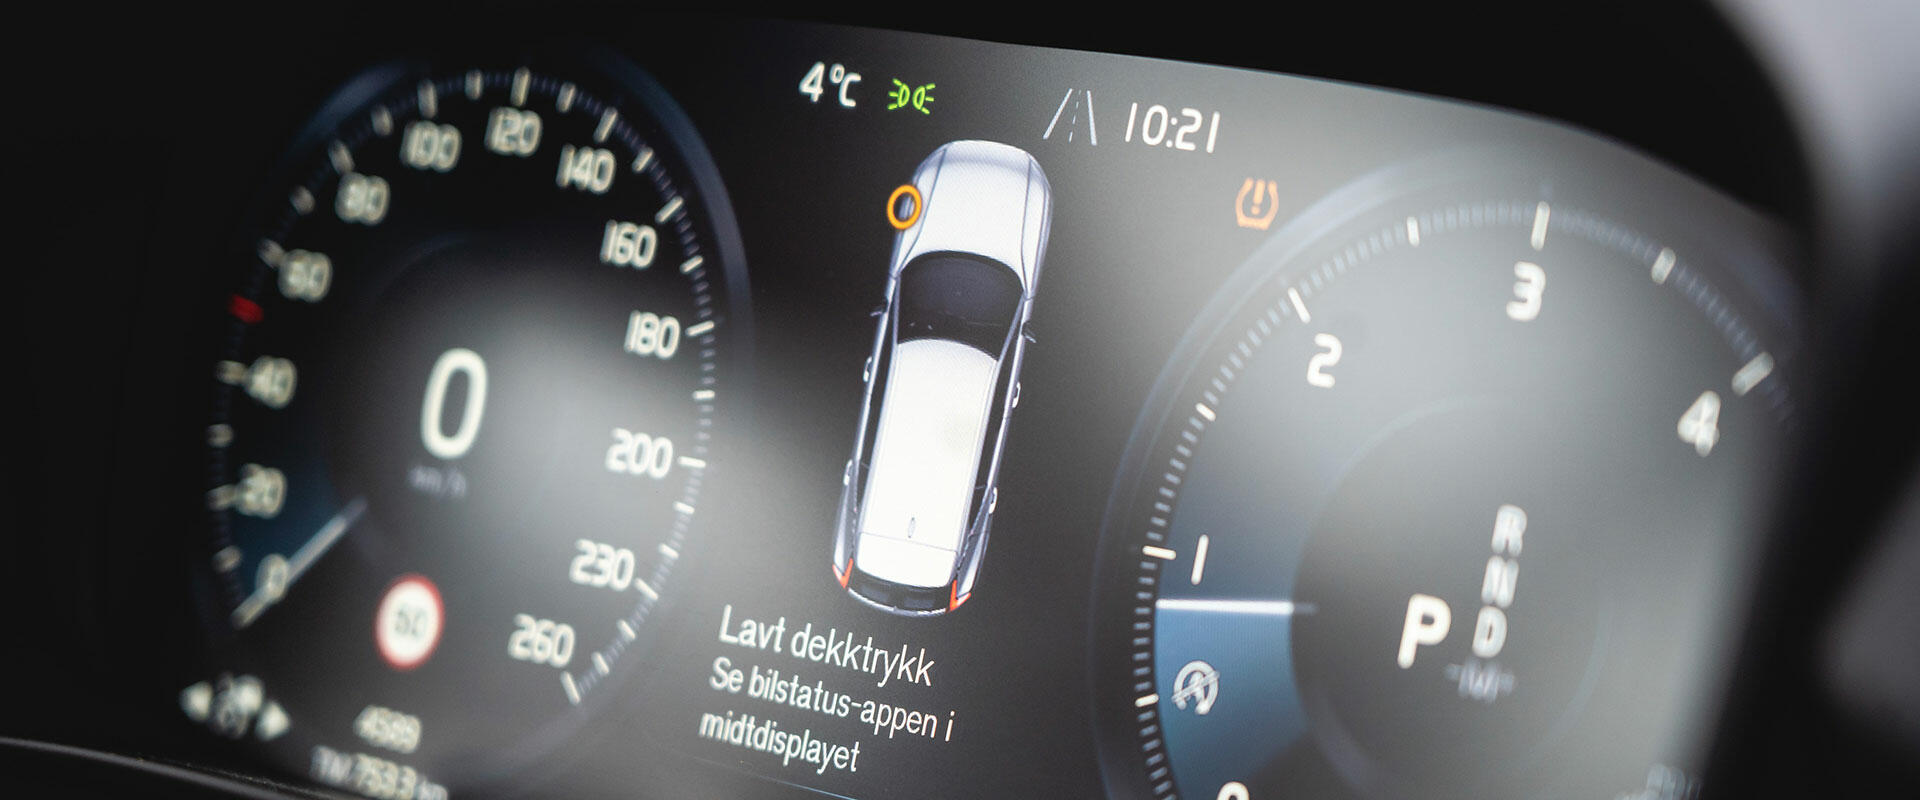 Varsellampe for dekktrykk lyser i et Volvo-dashboard